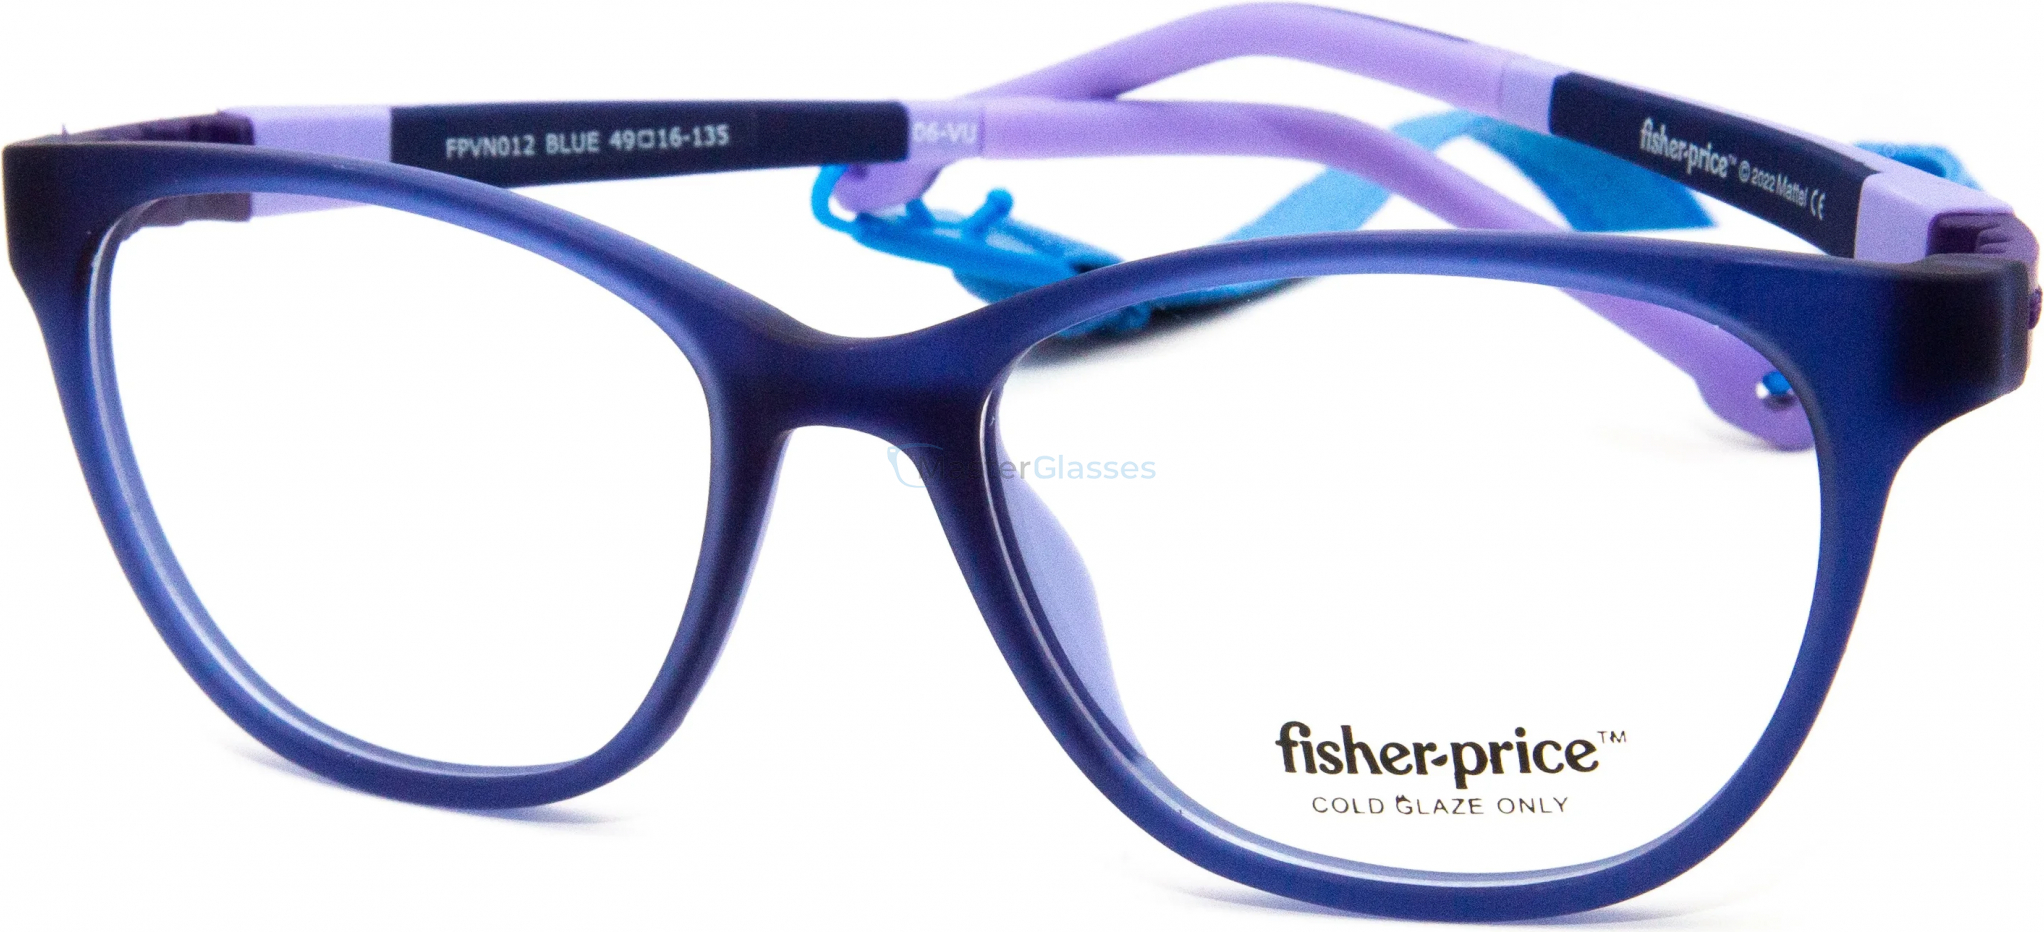  Fisher-Price FPVN012 BLUE 49-16-135